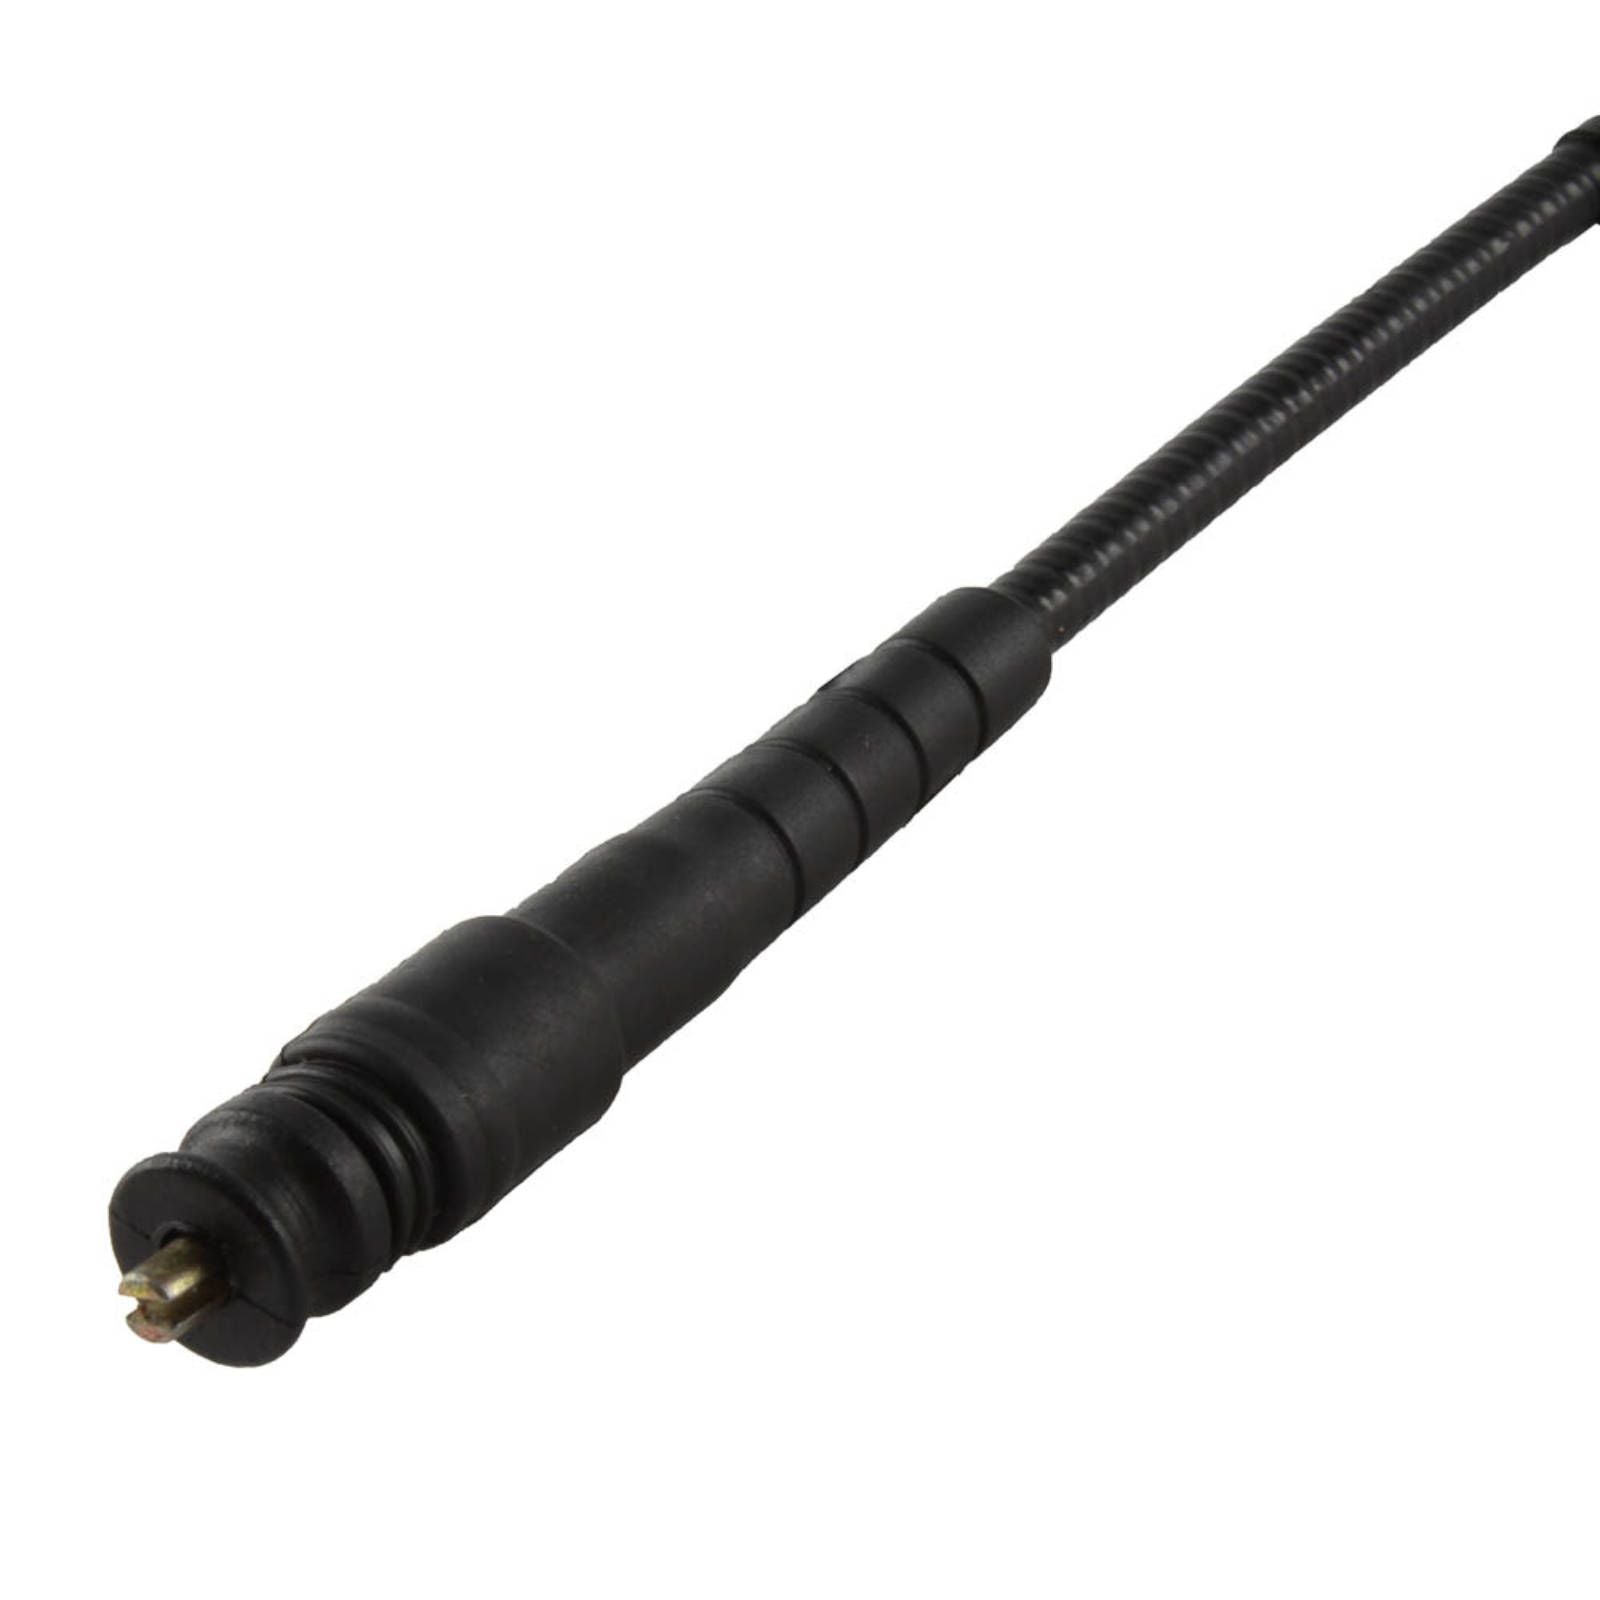 New WHITES Speedo Cable For Honda CTX200 #WPCC01009